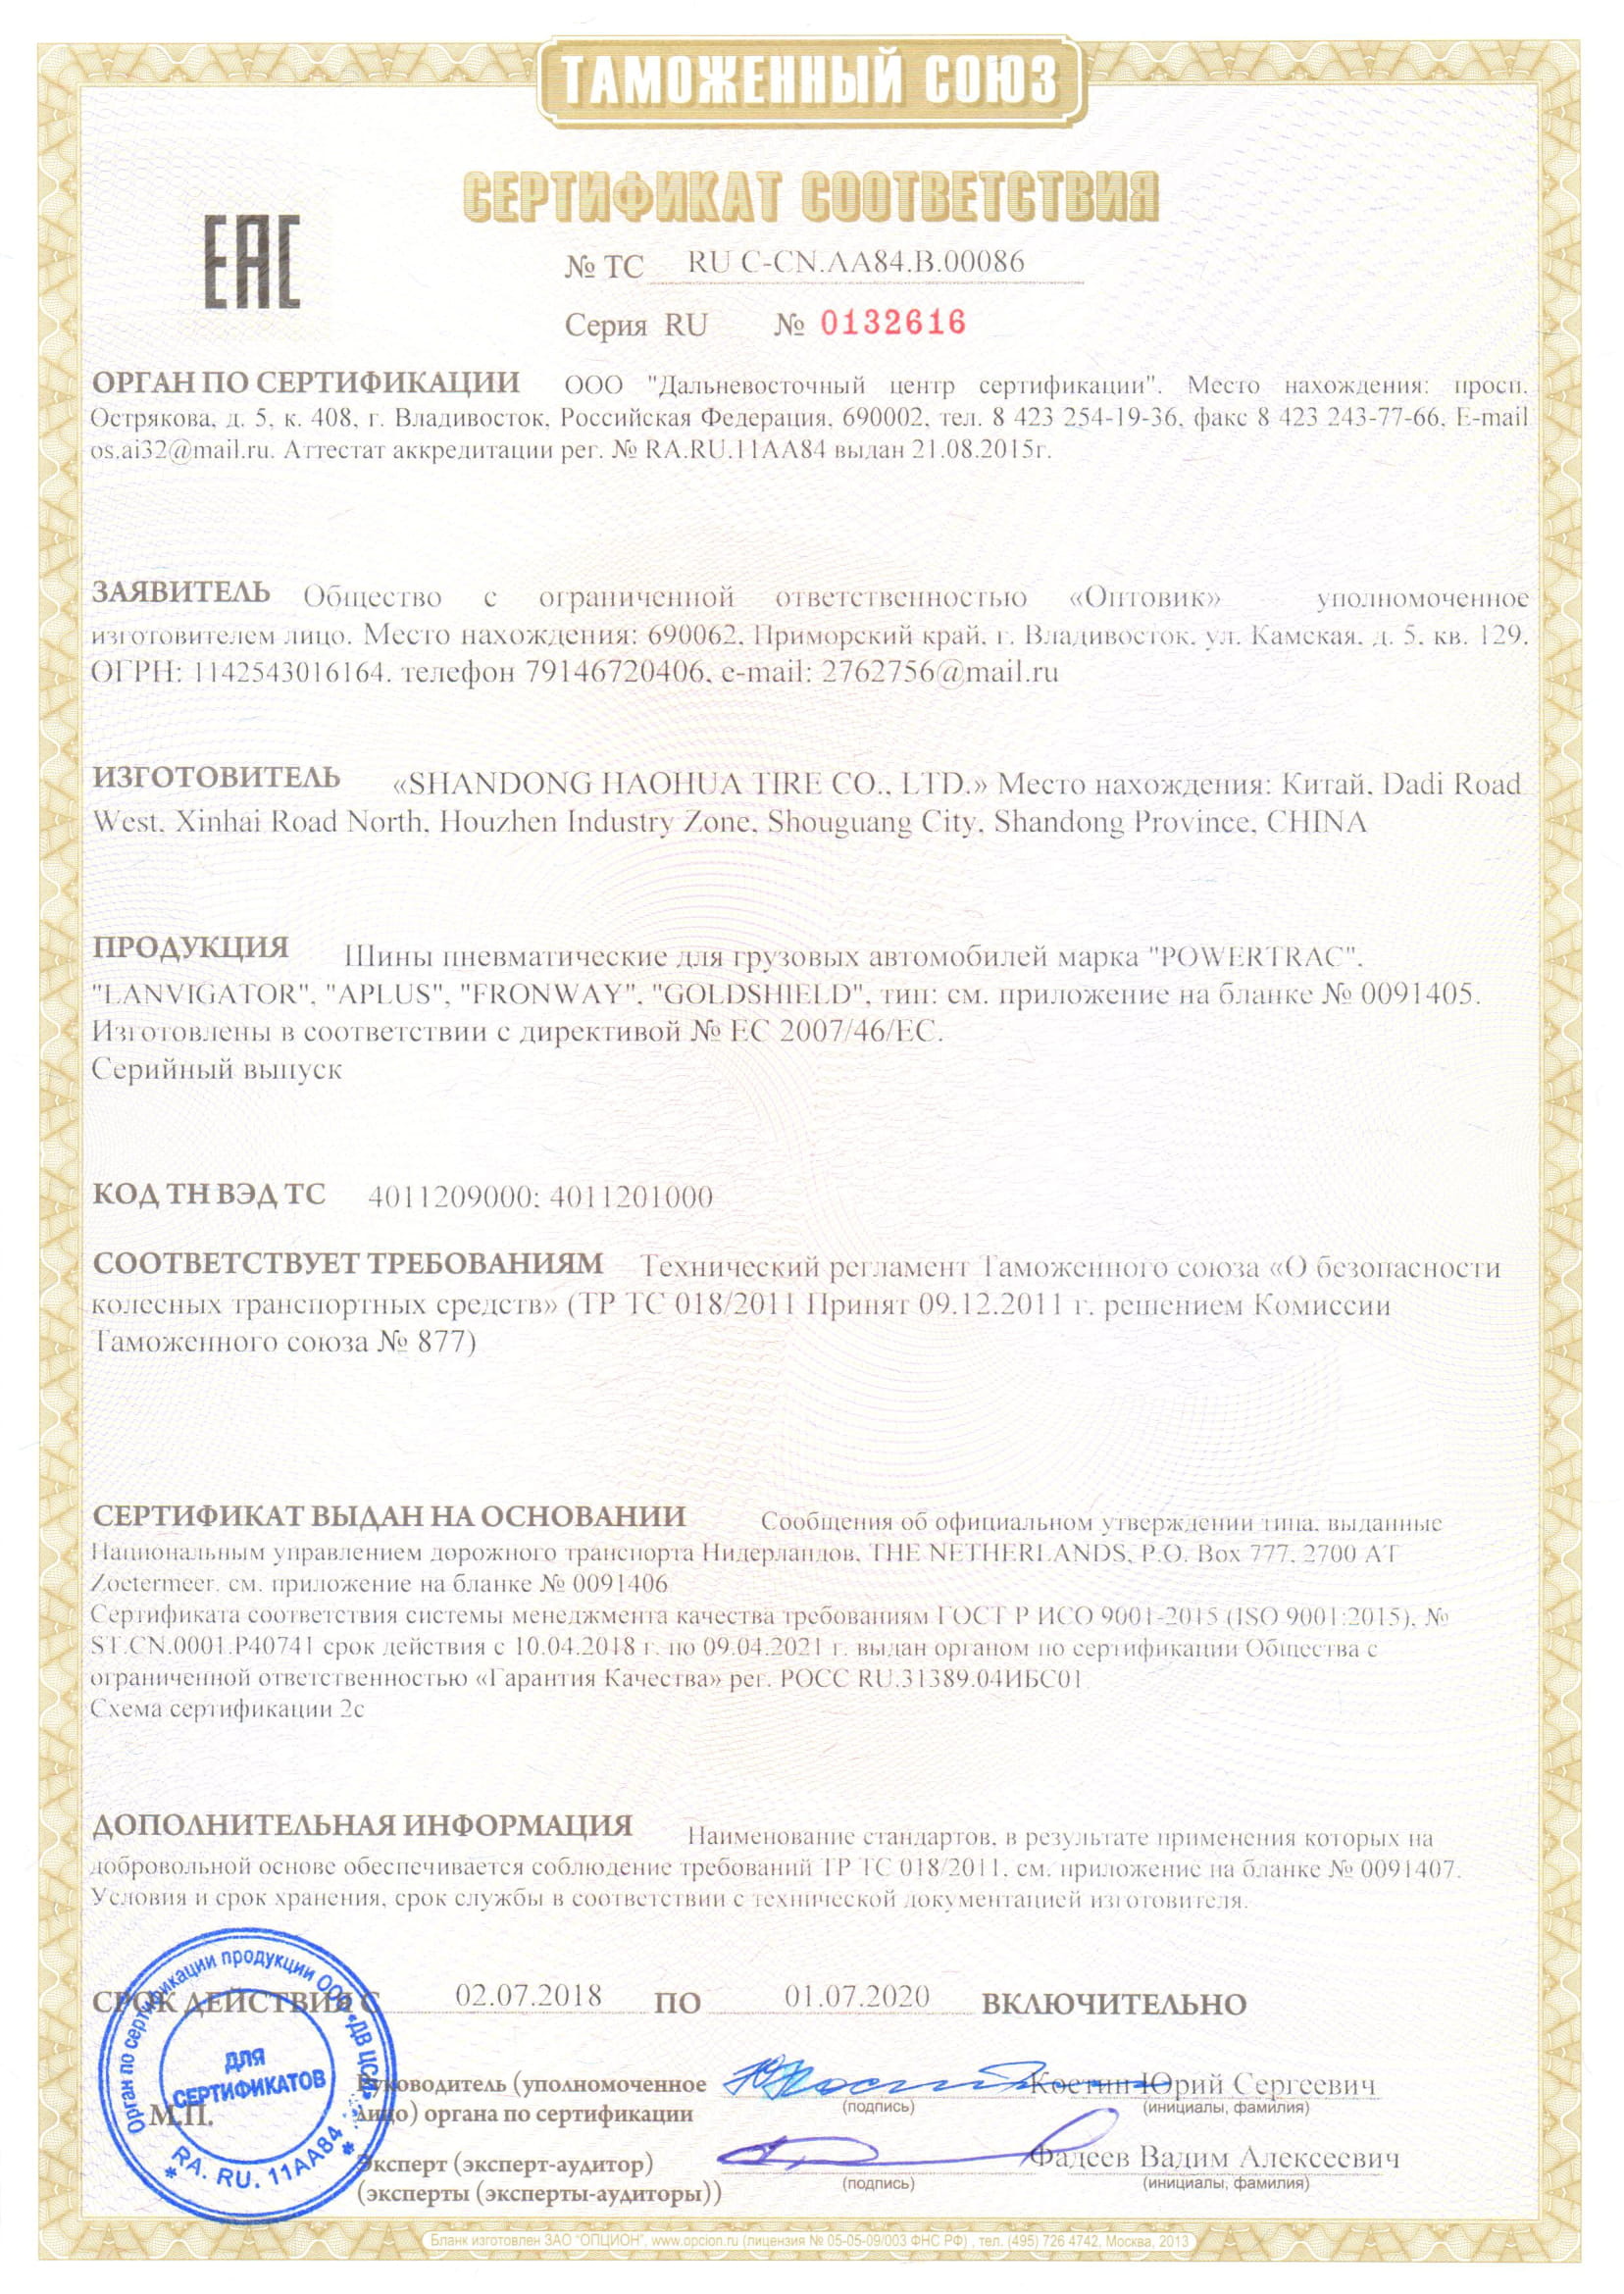 Сертификат соответствия № ТС RU C-CN.AA84.B.00086